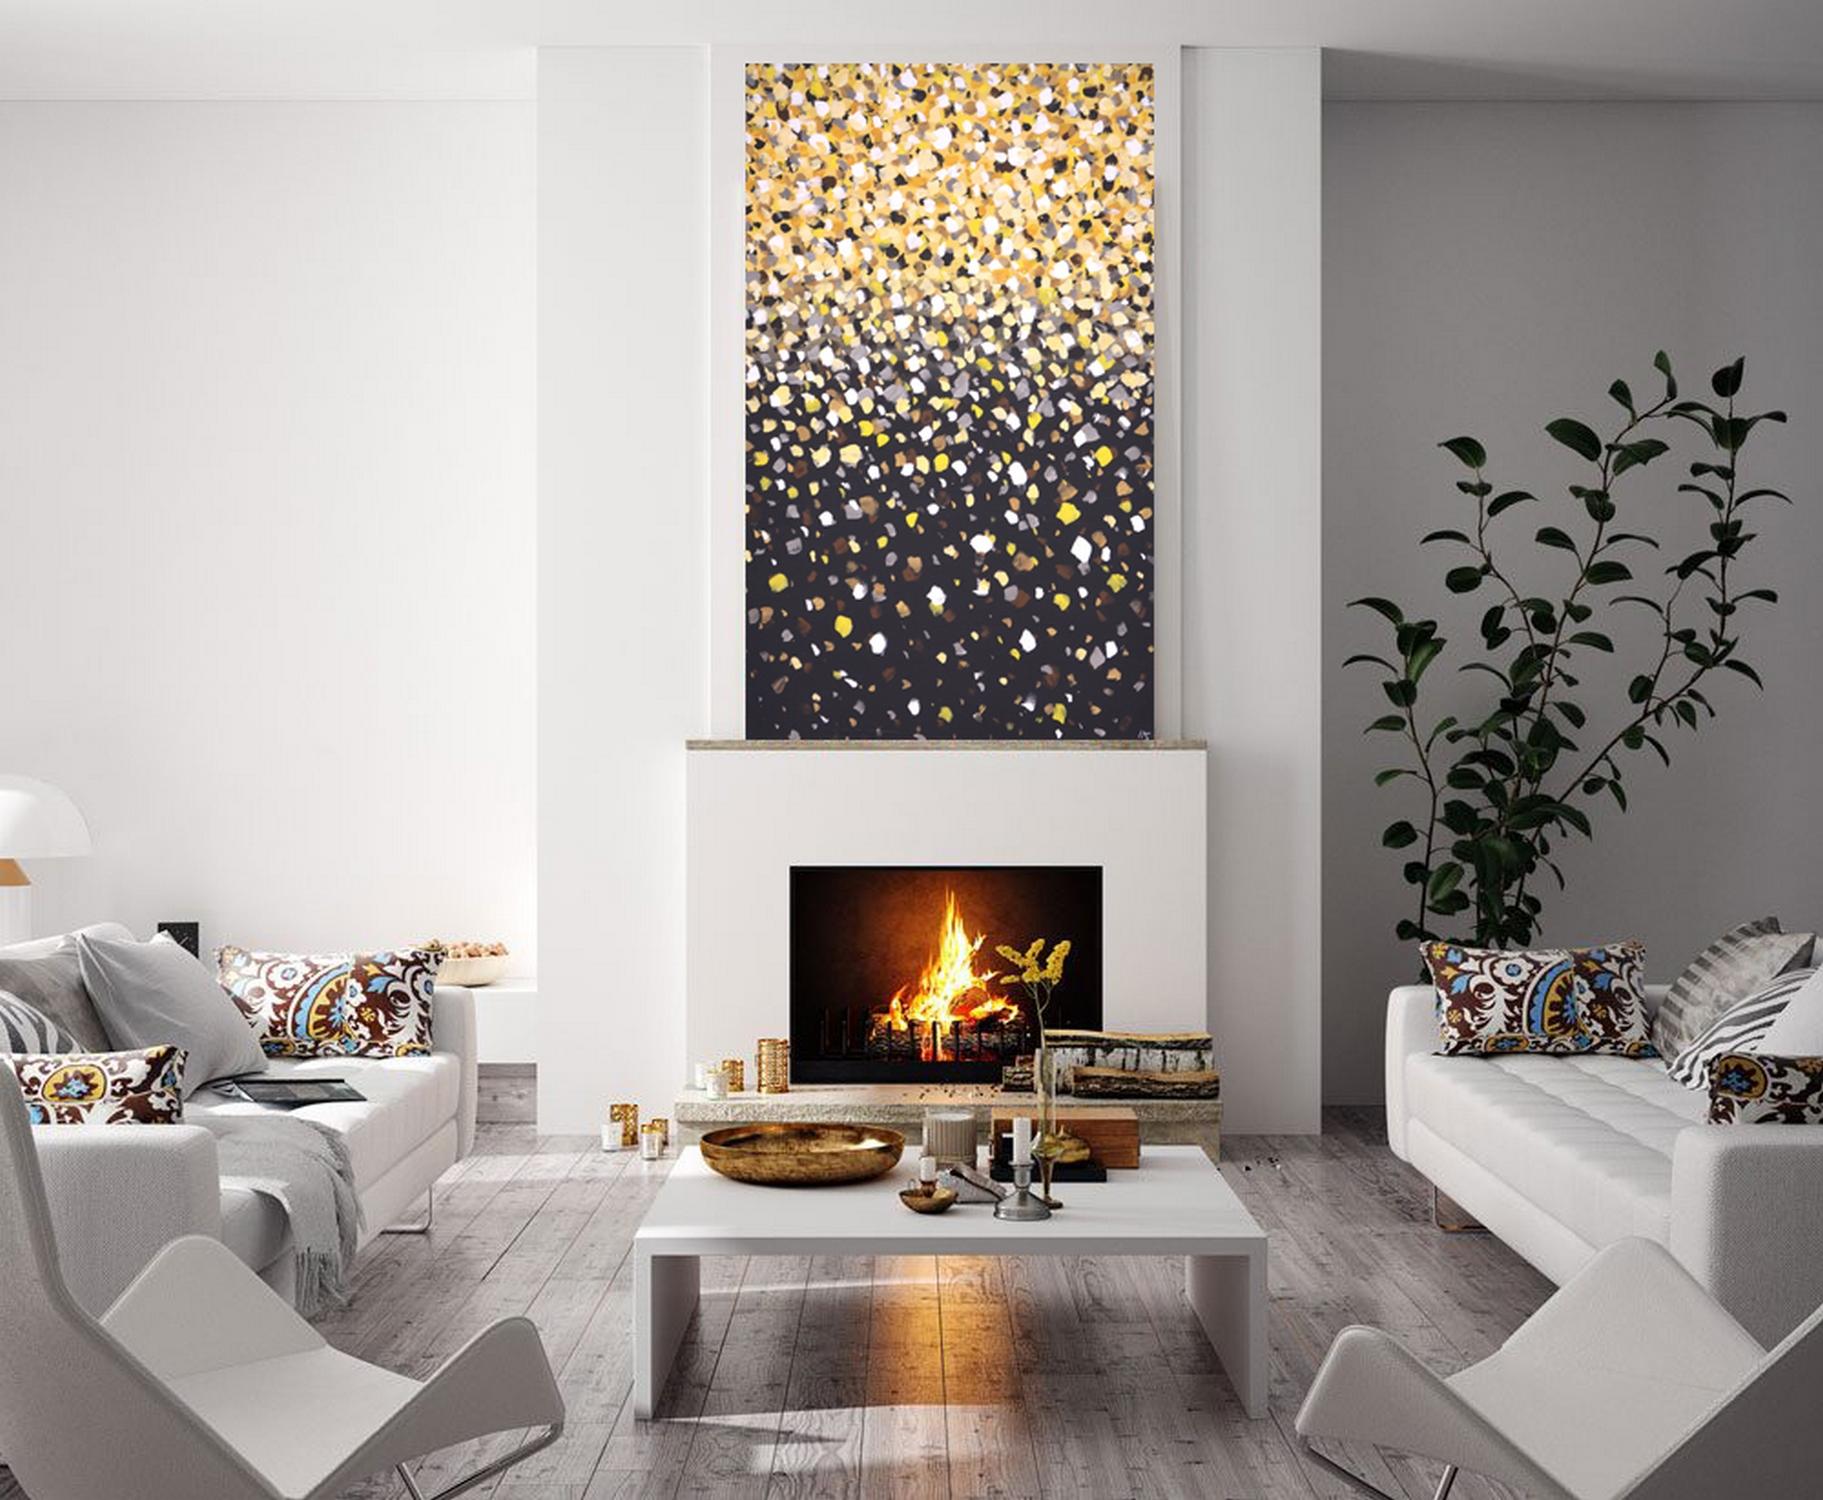 Poantillism. Glare. Interior Painting Modern Design with Black Gold Yellow Dots 7